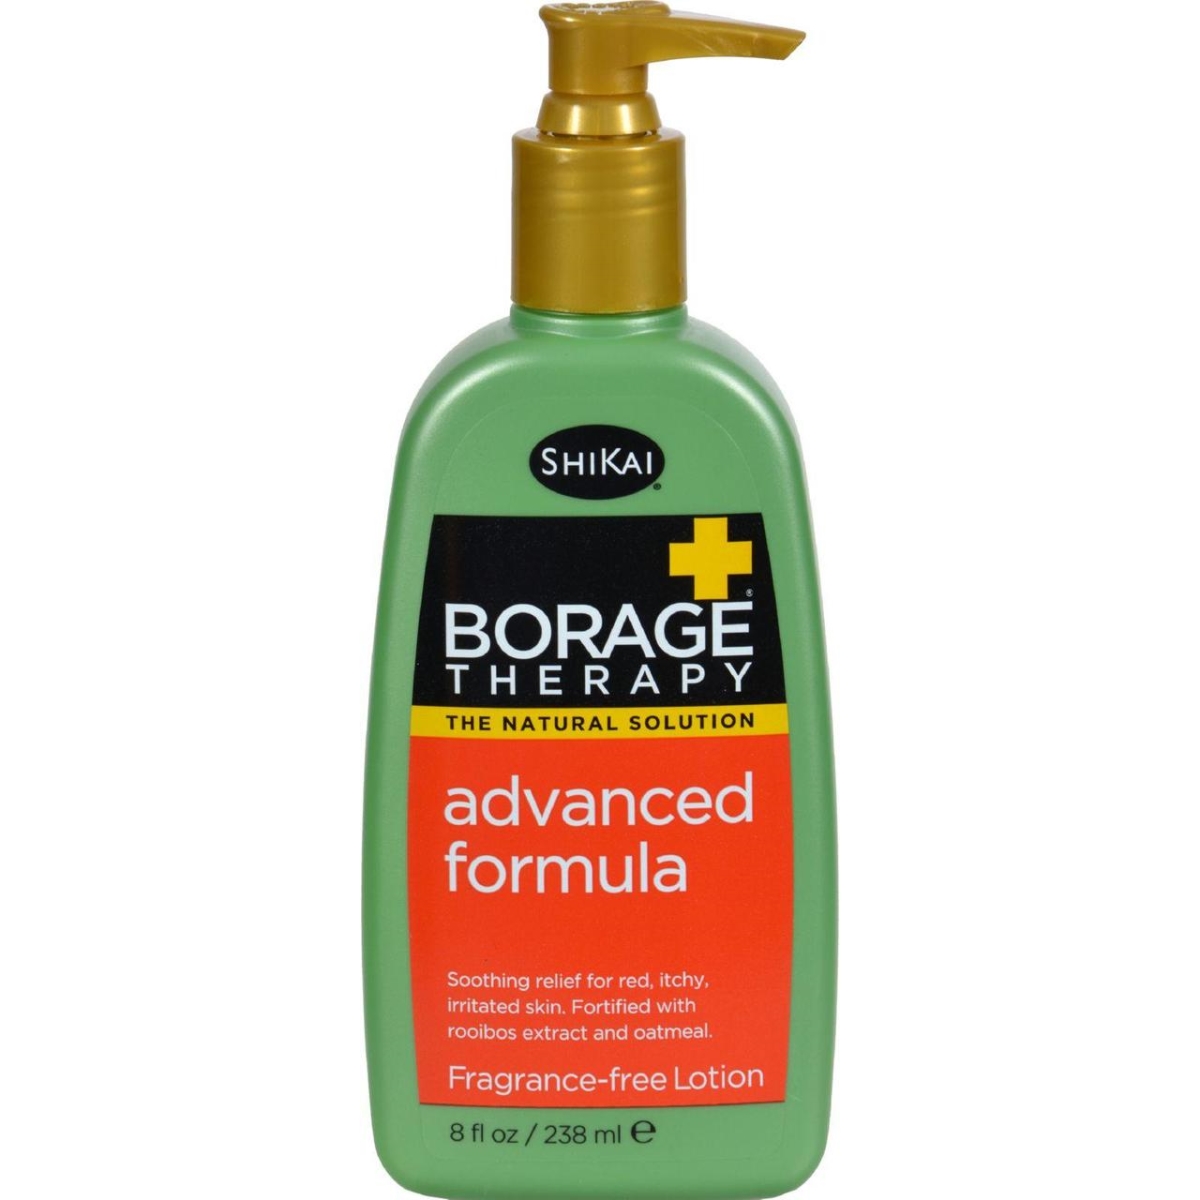 Hg0611434 8 Fl Oz Borage Therapy Advanced Formula Fragrance Free